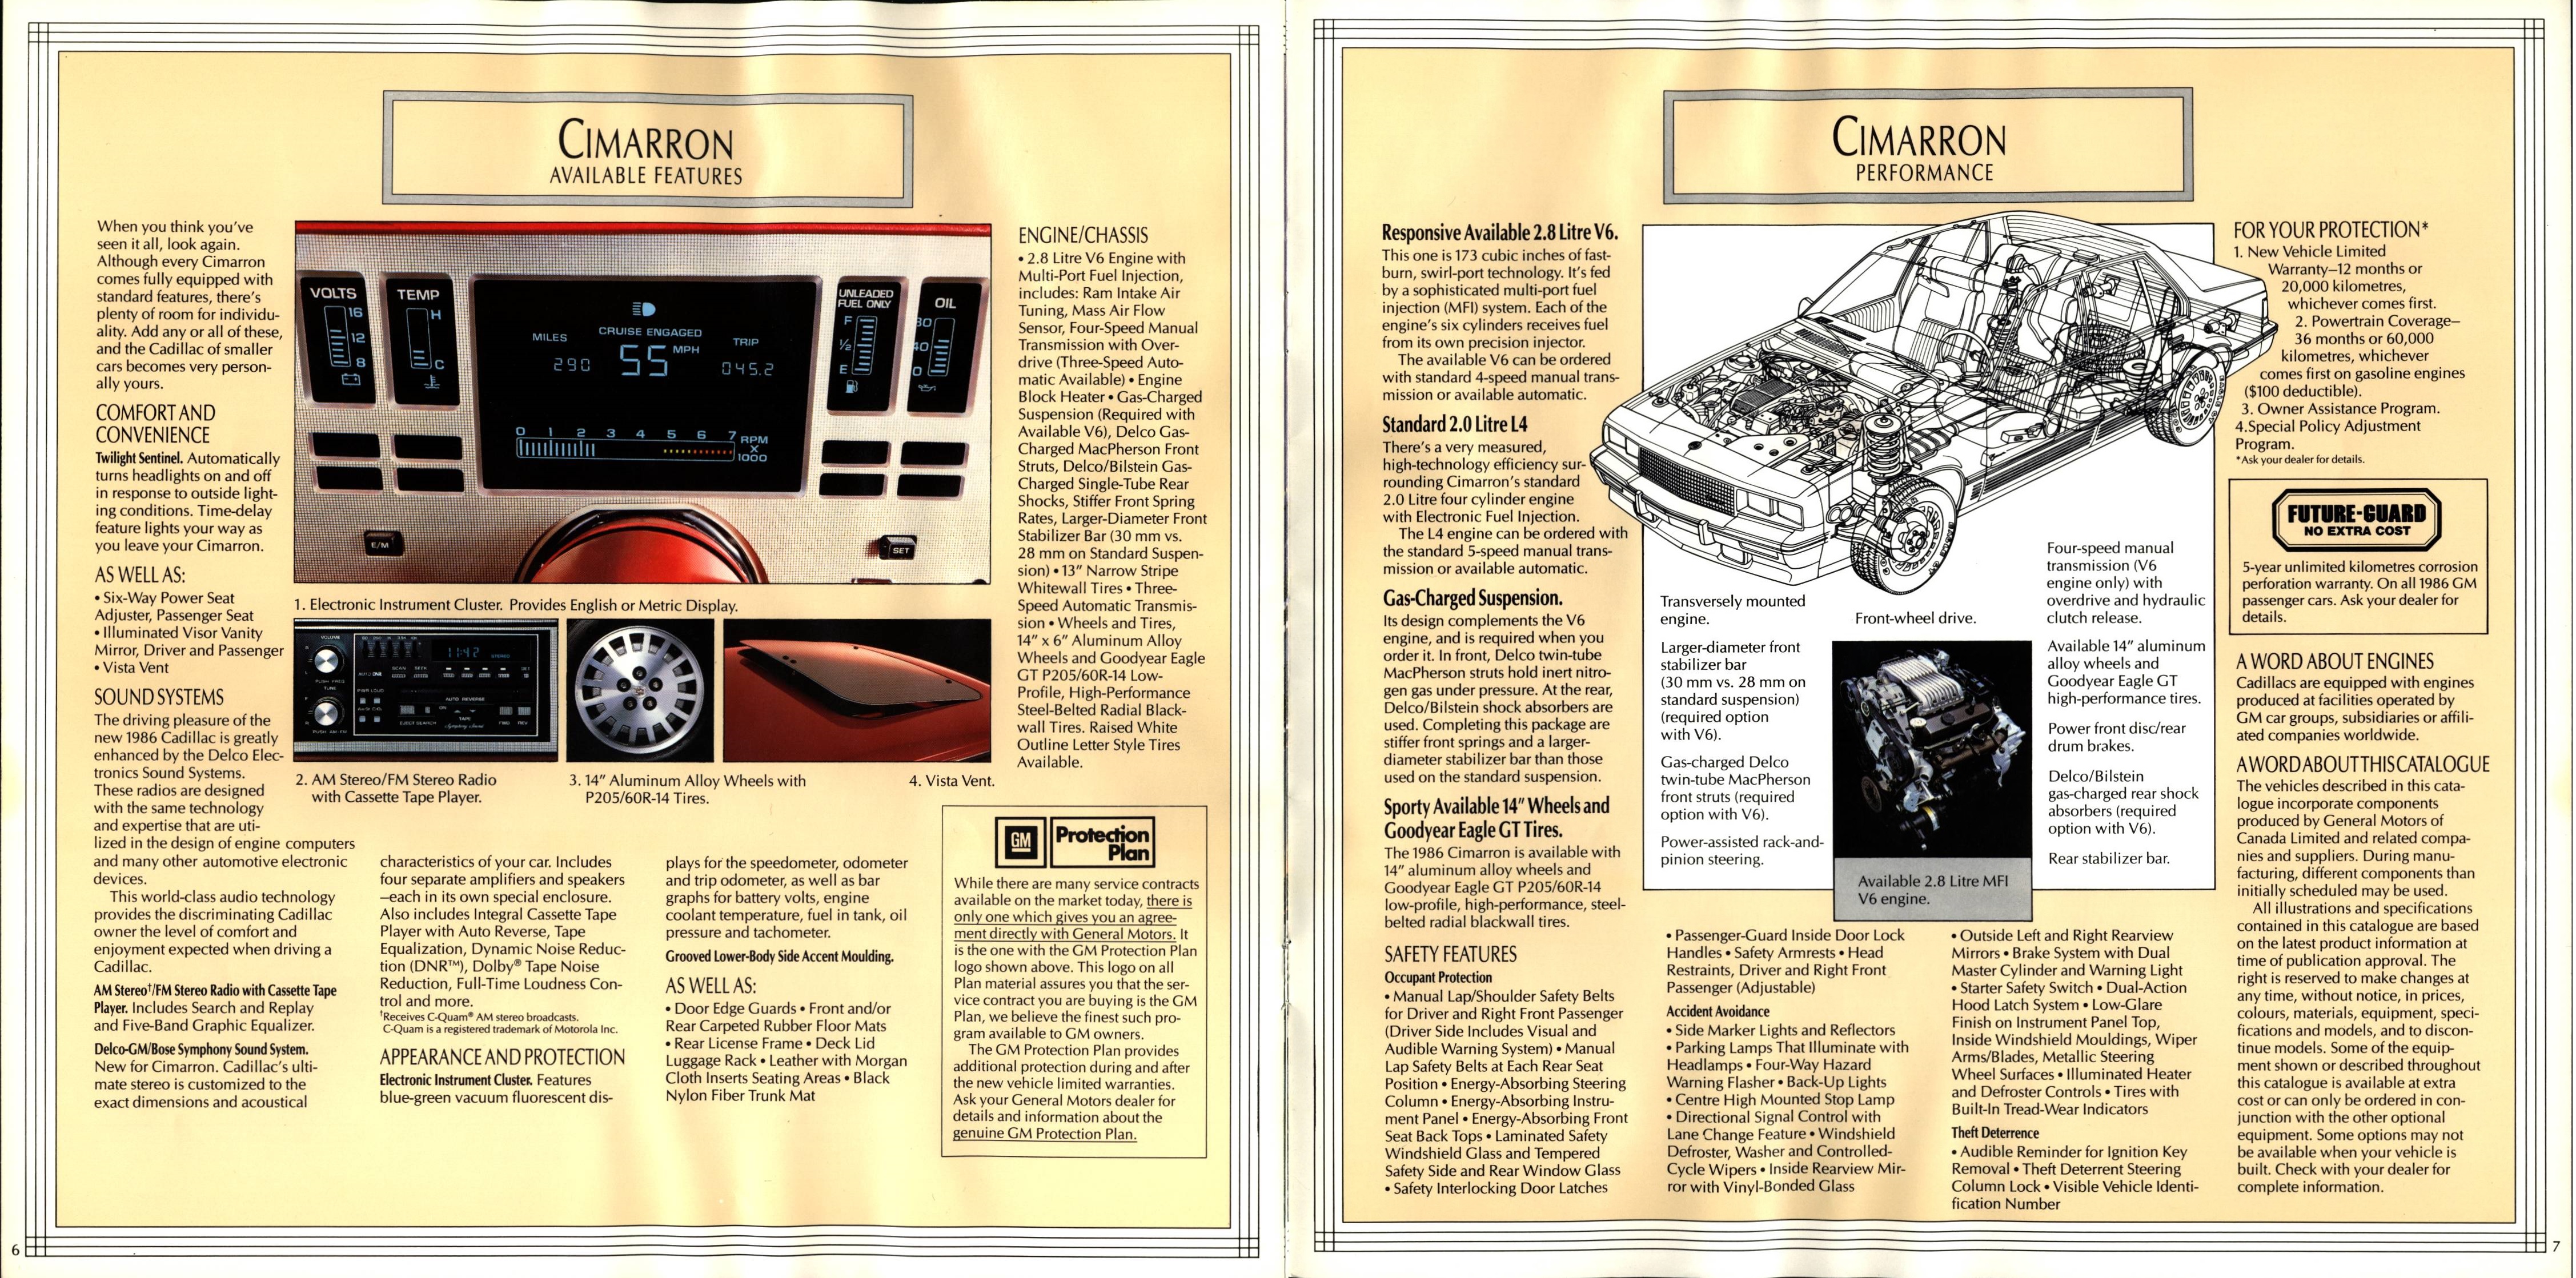 1986 Cadillac Cimarron Brochure (Cdn) 06-07